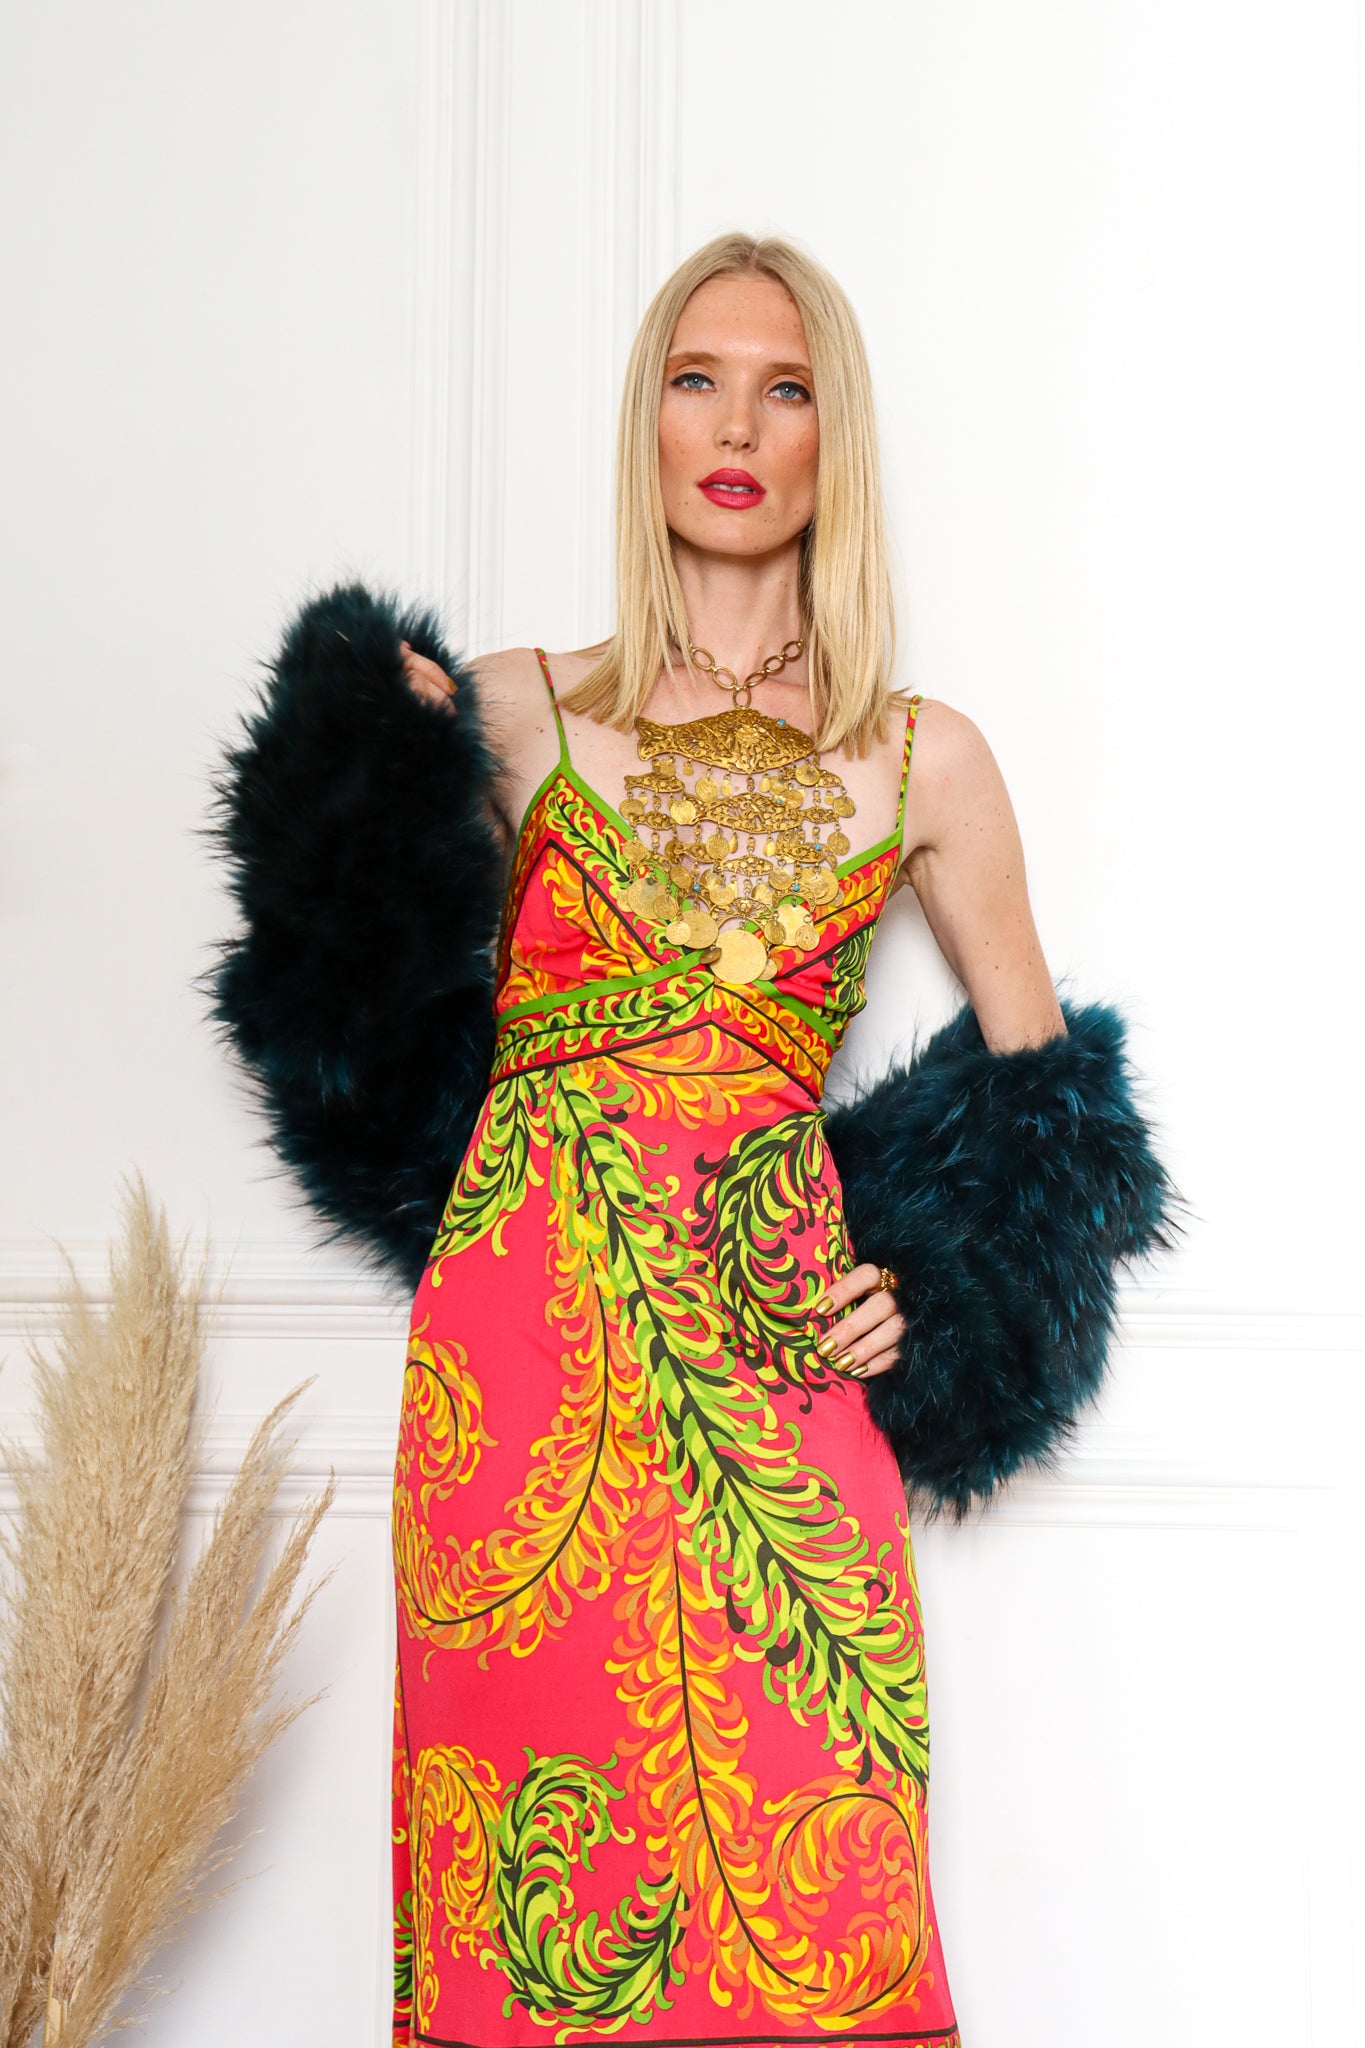 Model Miranda in Pucci Dress, Sonia Rykiel Sleeve Jacket, & Moon Fish Necklace at Recess Los Angeles